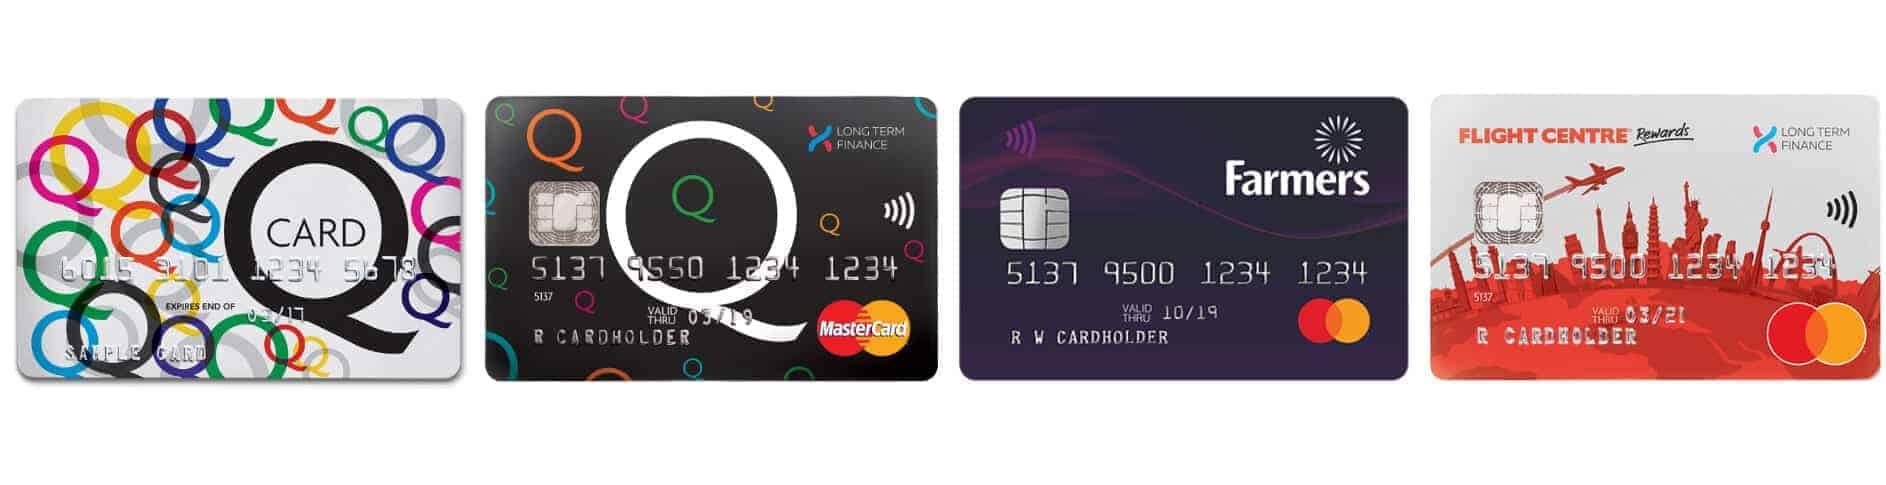 Images of a Q Card, Q Mastercard, Farmers Mastercard, and Flight Centre Mastercard